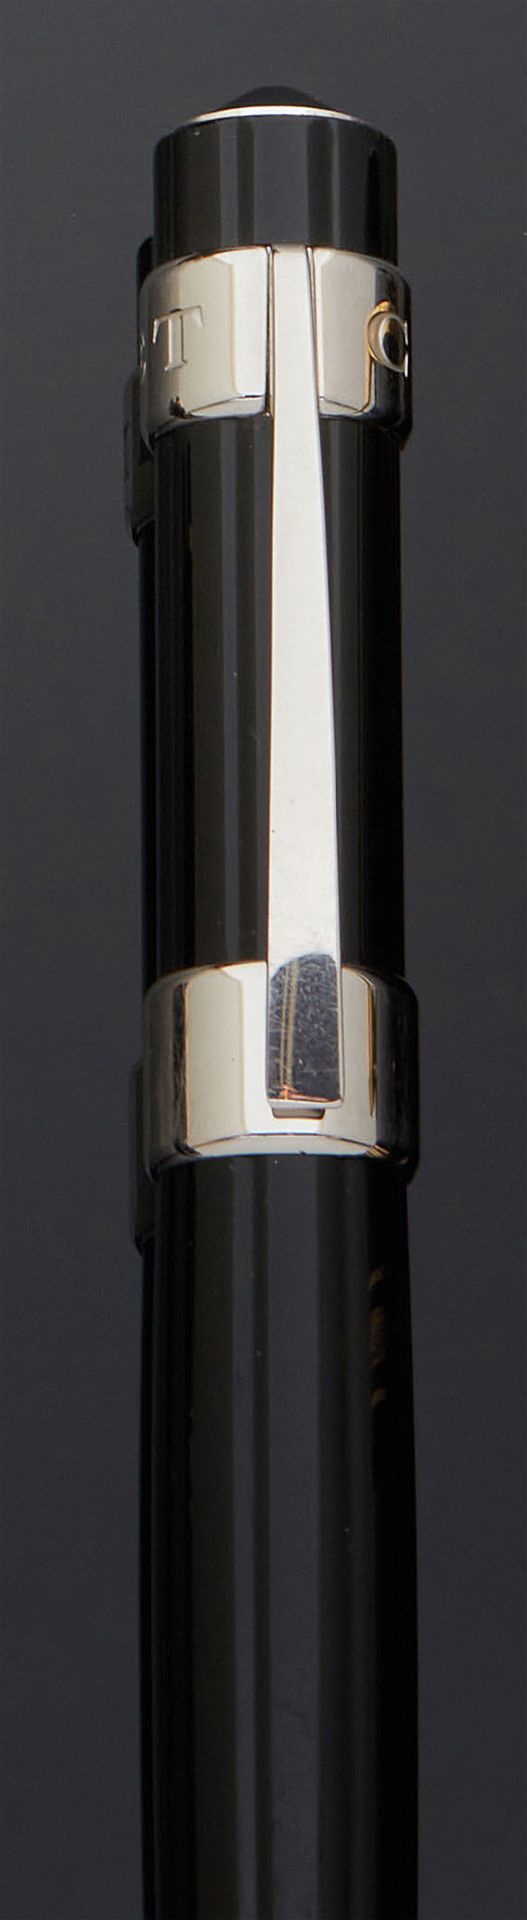 CHAUMET A beautiful fountain pen (gold nib 750 mm).